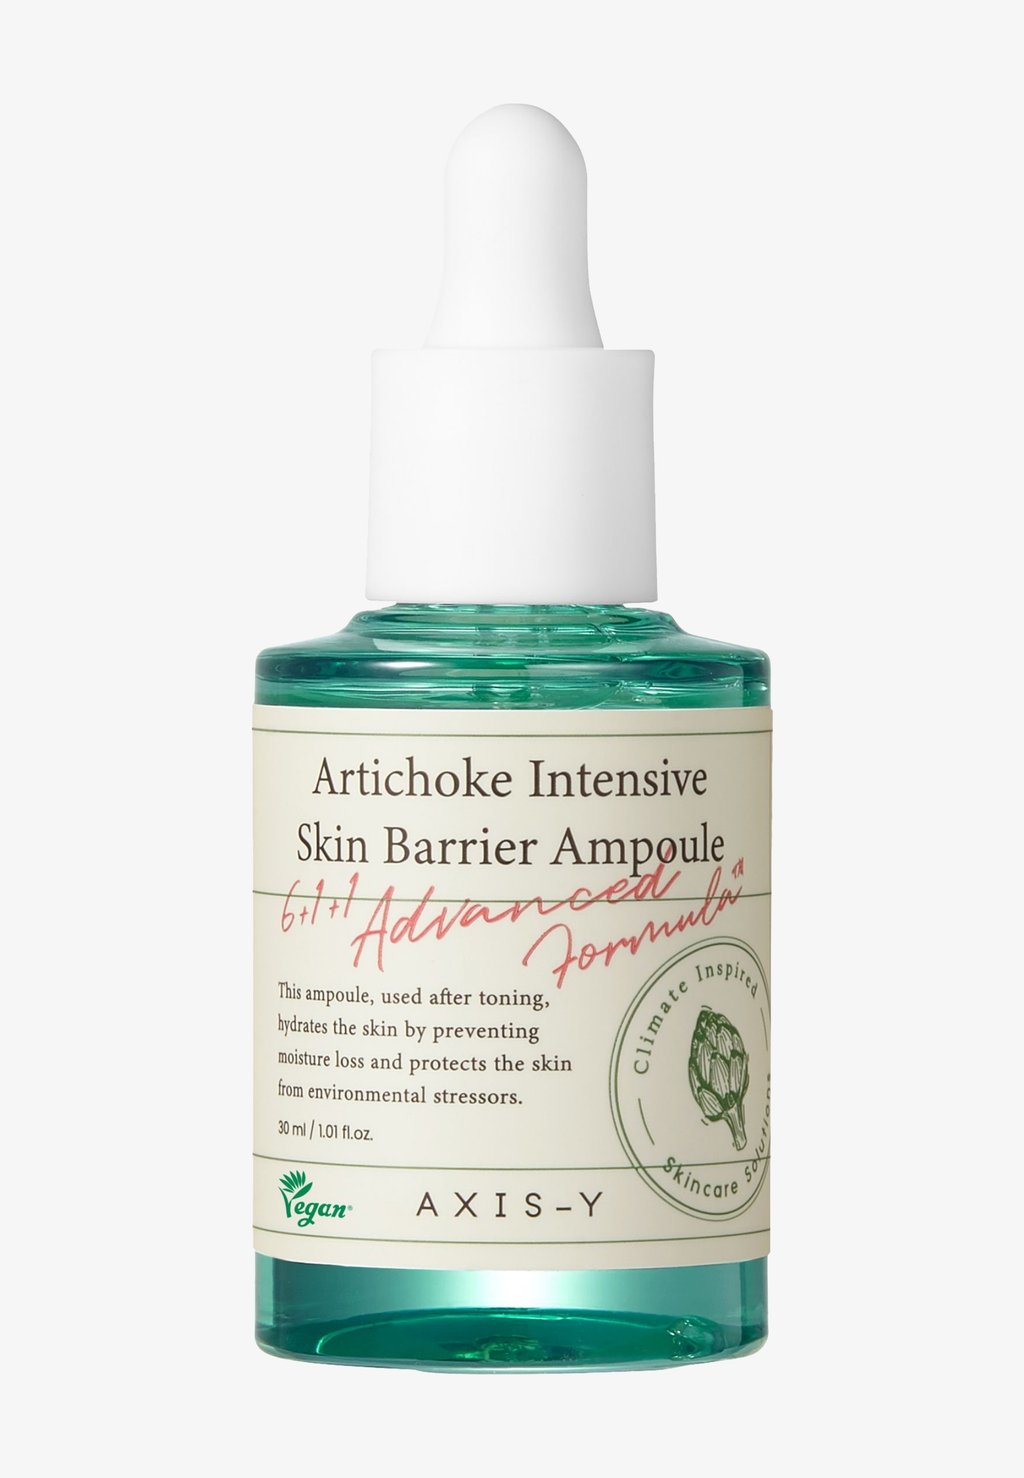 Сыворотка Artichoke Intensive Skin Barrier Ampoule AXIS-Y axis y ampoule artichoke intensive skin barrier 1 01 fl oz 30 ml